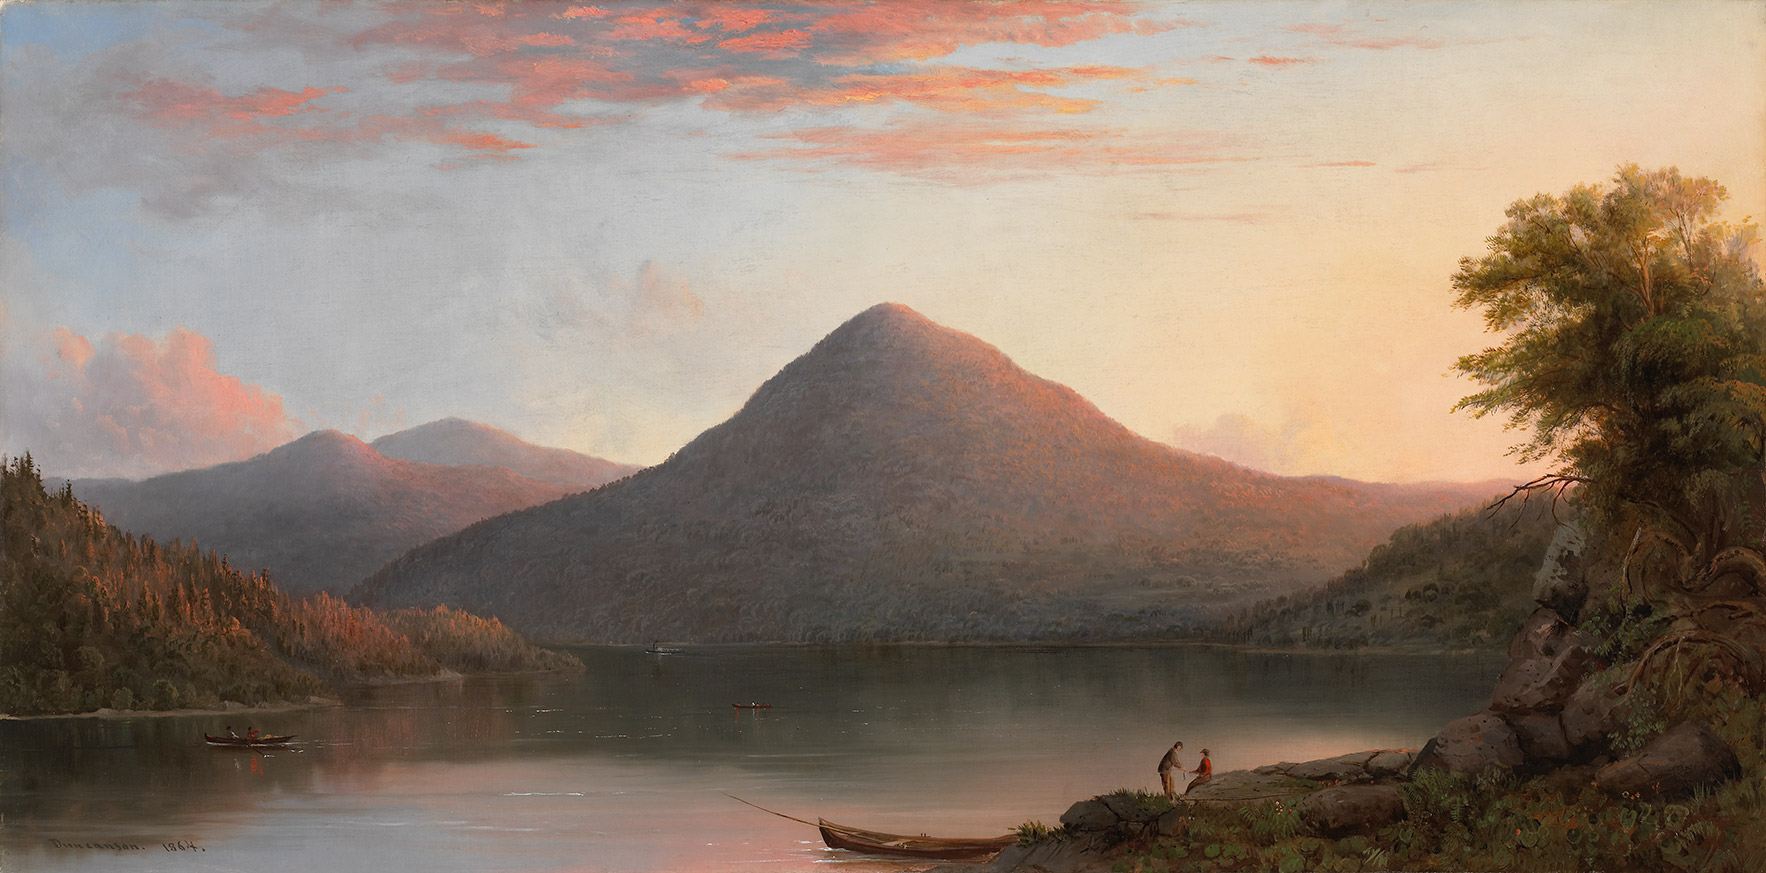 Планина Совина глава by Robert Duncanson - 1864. - 45.7 x 91.7 cm 